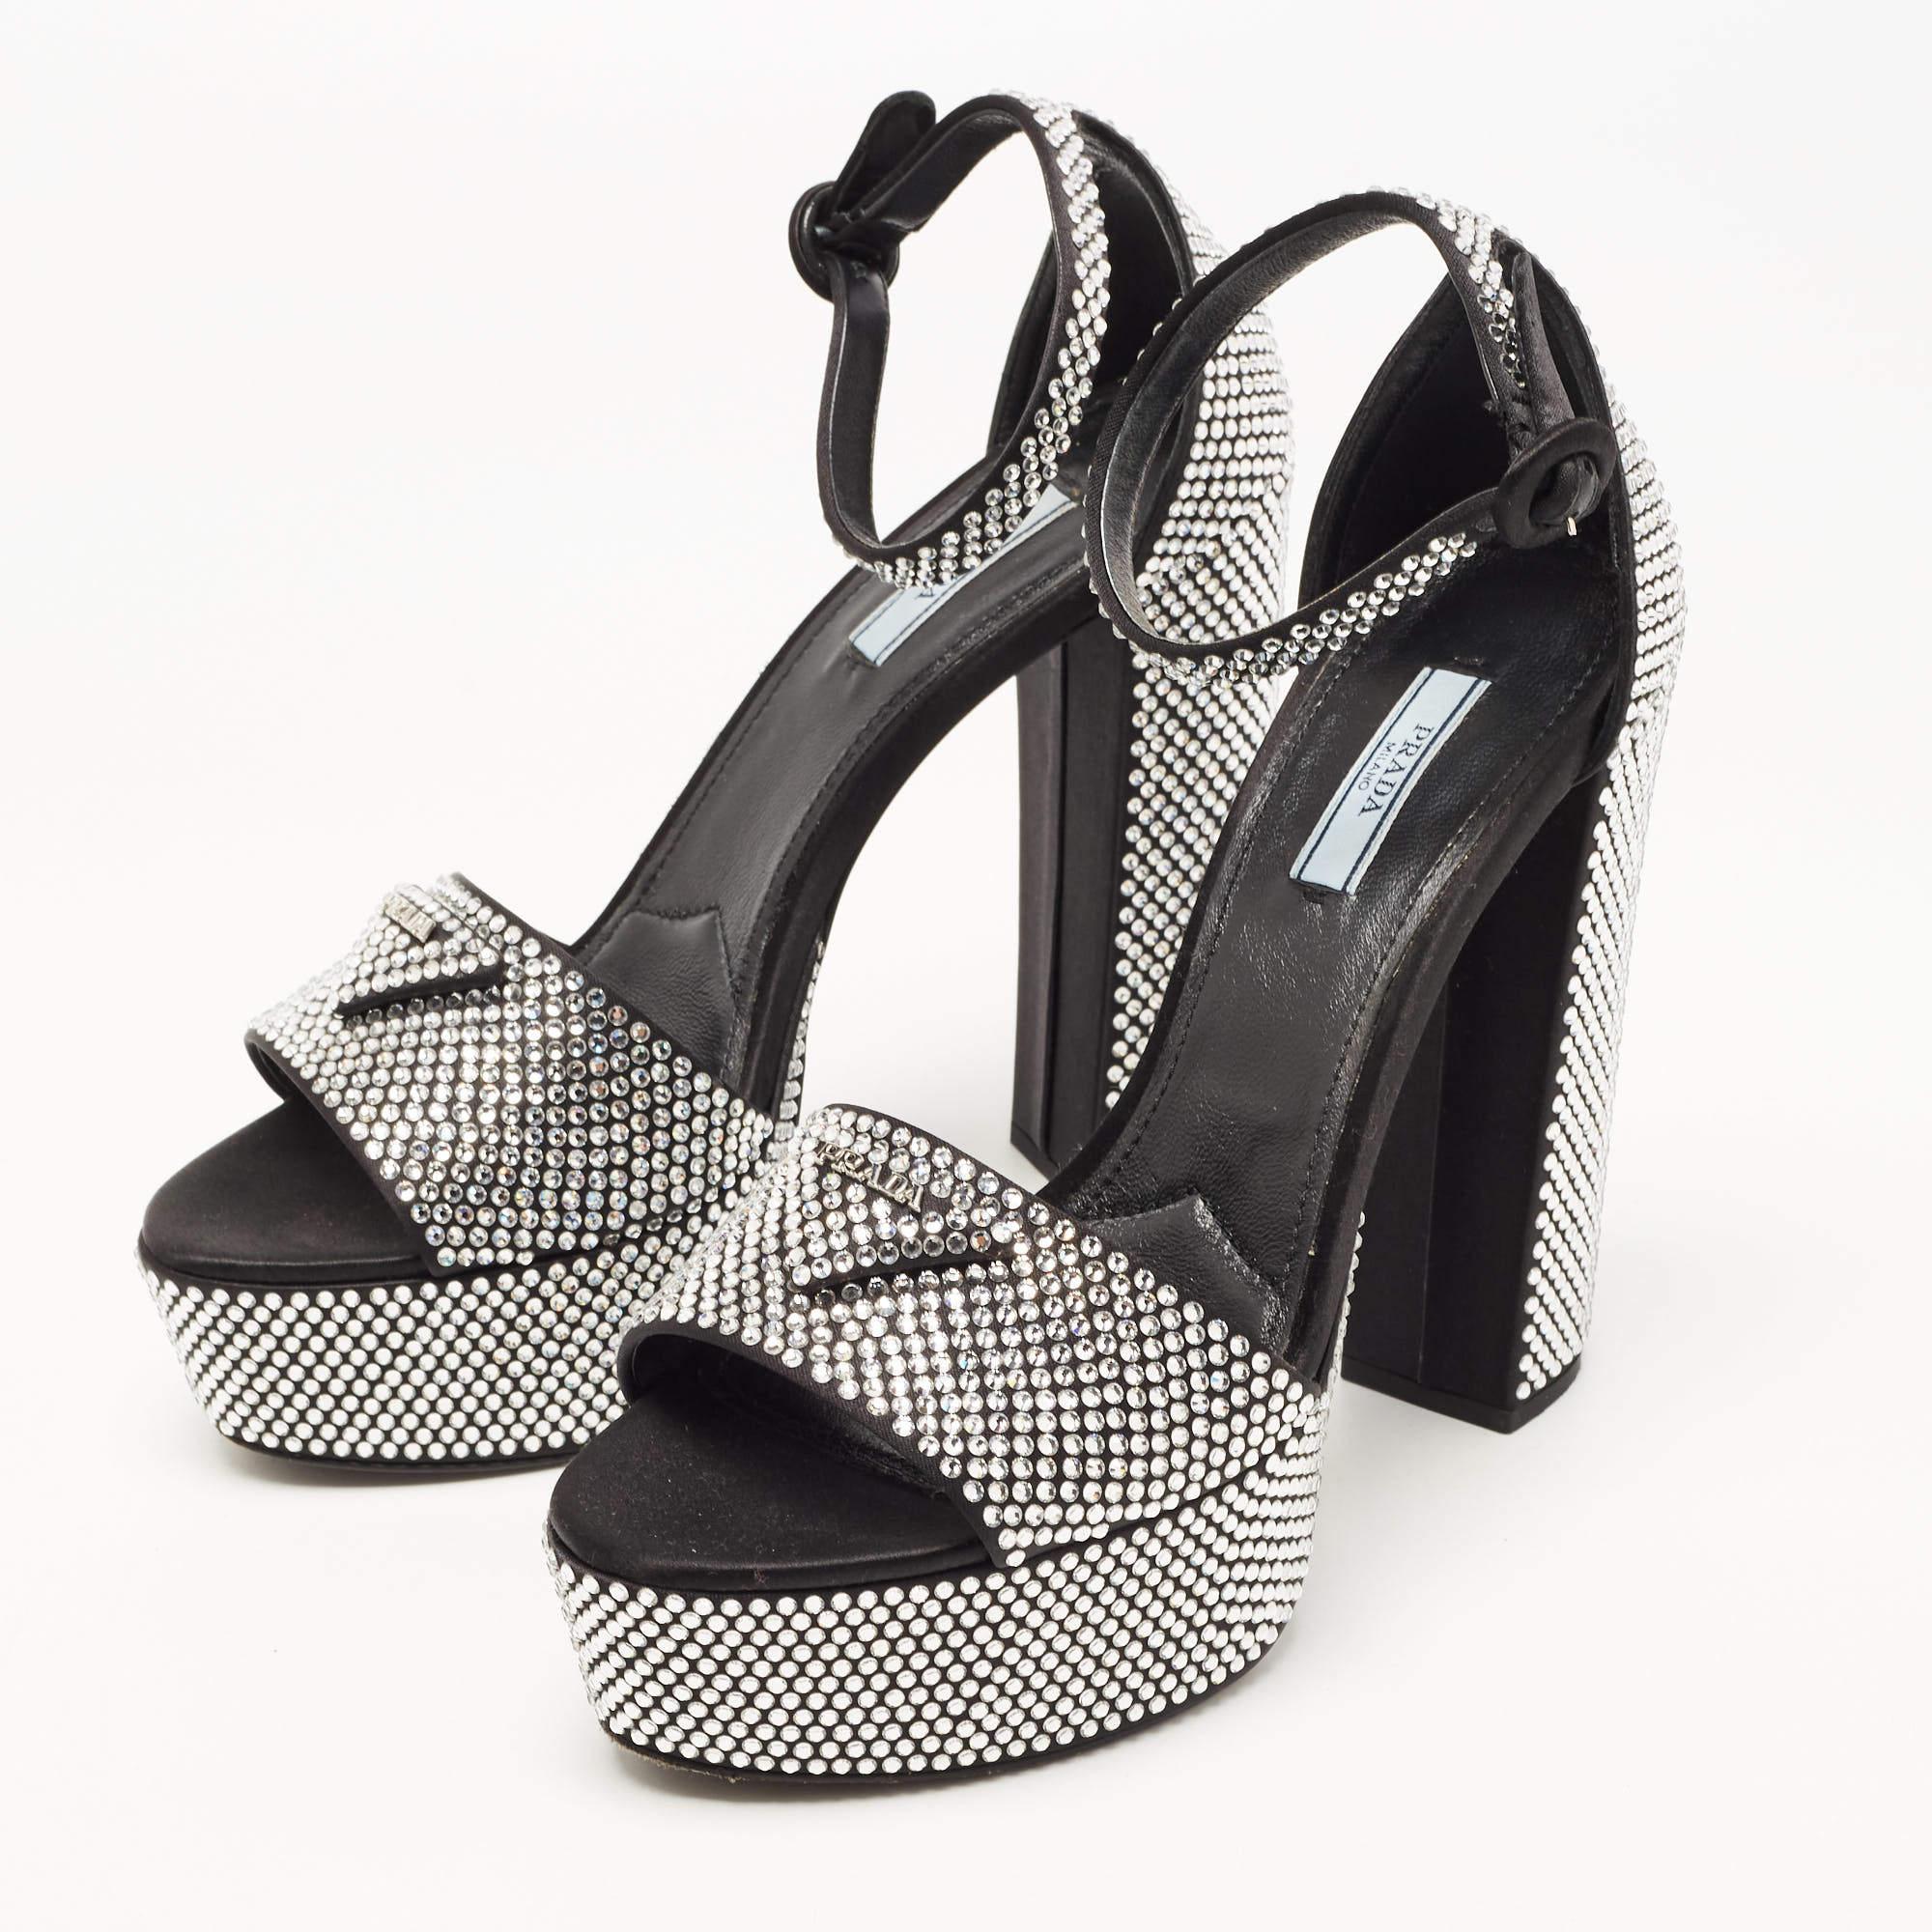 Prada Black/Silver Satin and Crystals Platform Sandals Size 39.5 5